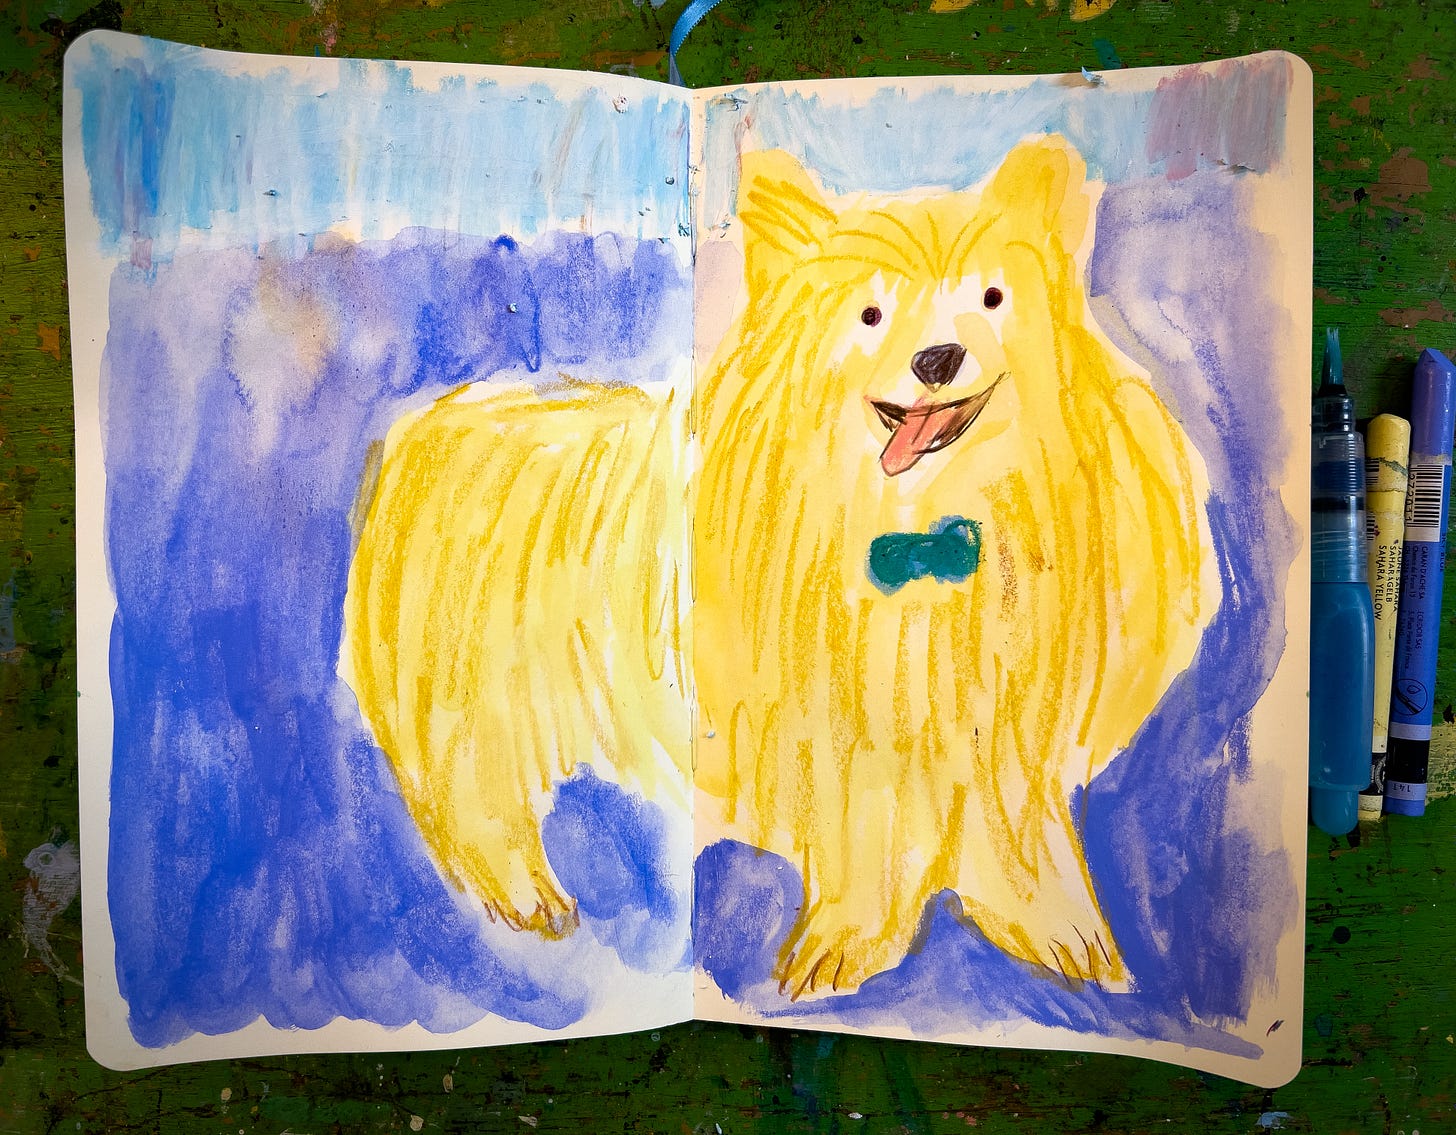 sketchbook illustration of fluffy dog from Muttville by Beth Spencer